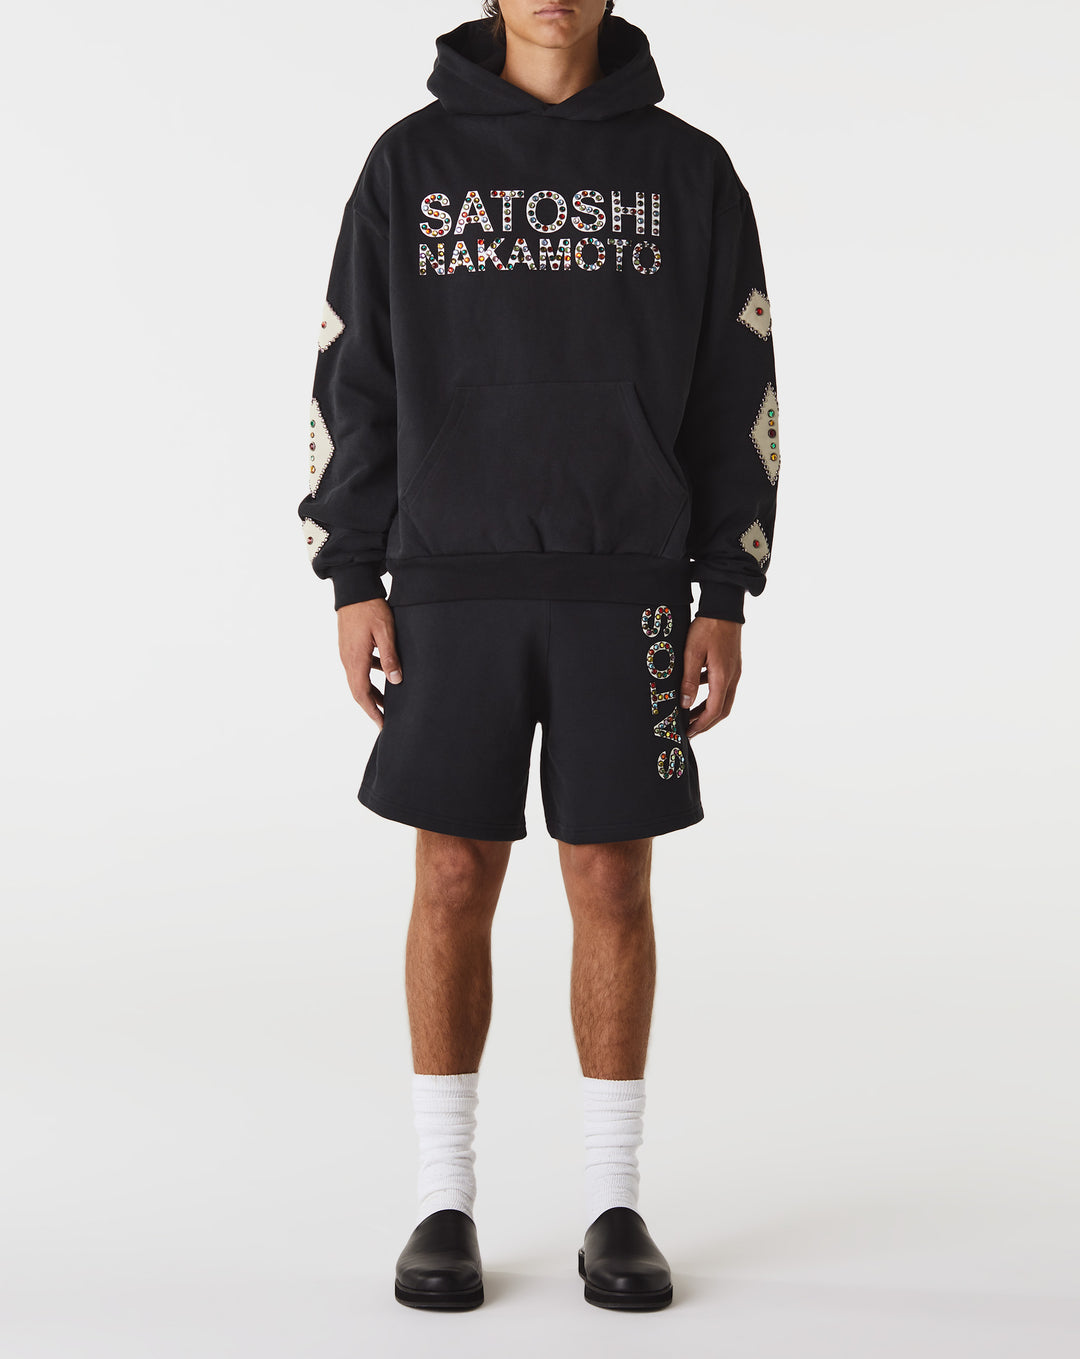 Satoshi Nakamoto calvin klein jeans logo print padded jacket item  - Cheap Erlebniswelt-fliegenfischen Jordan outlet